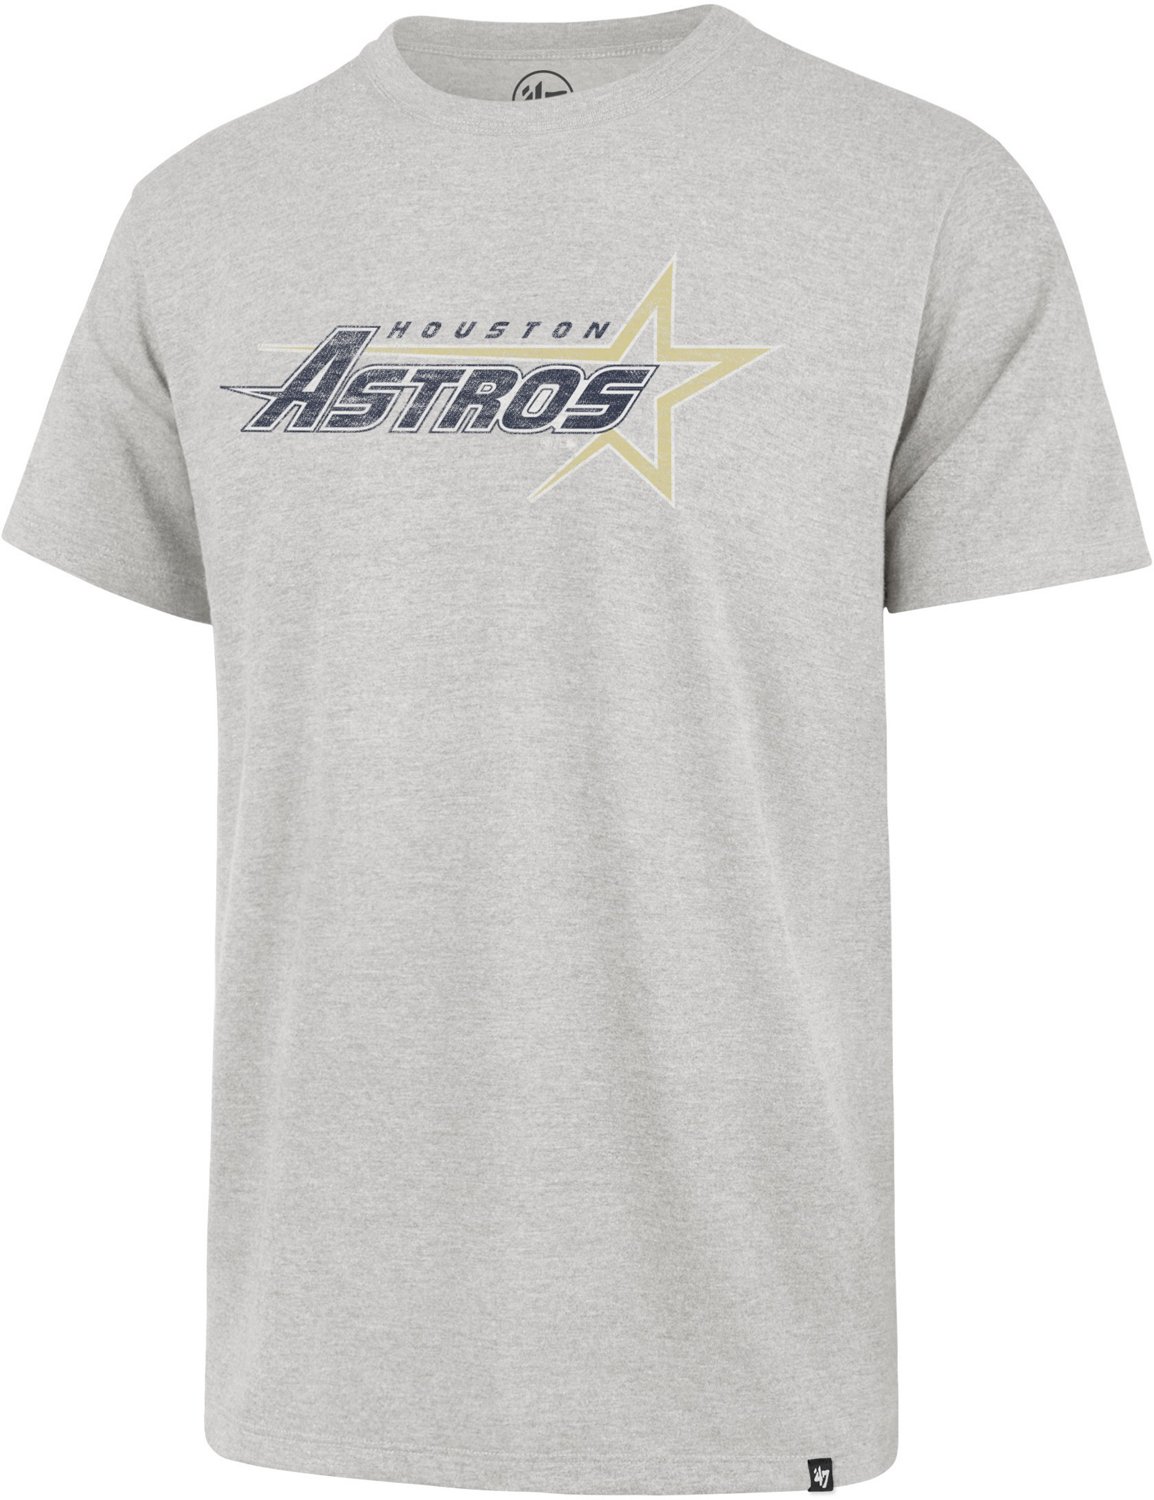 astros shooting star shirt